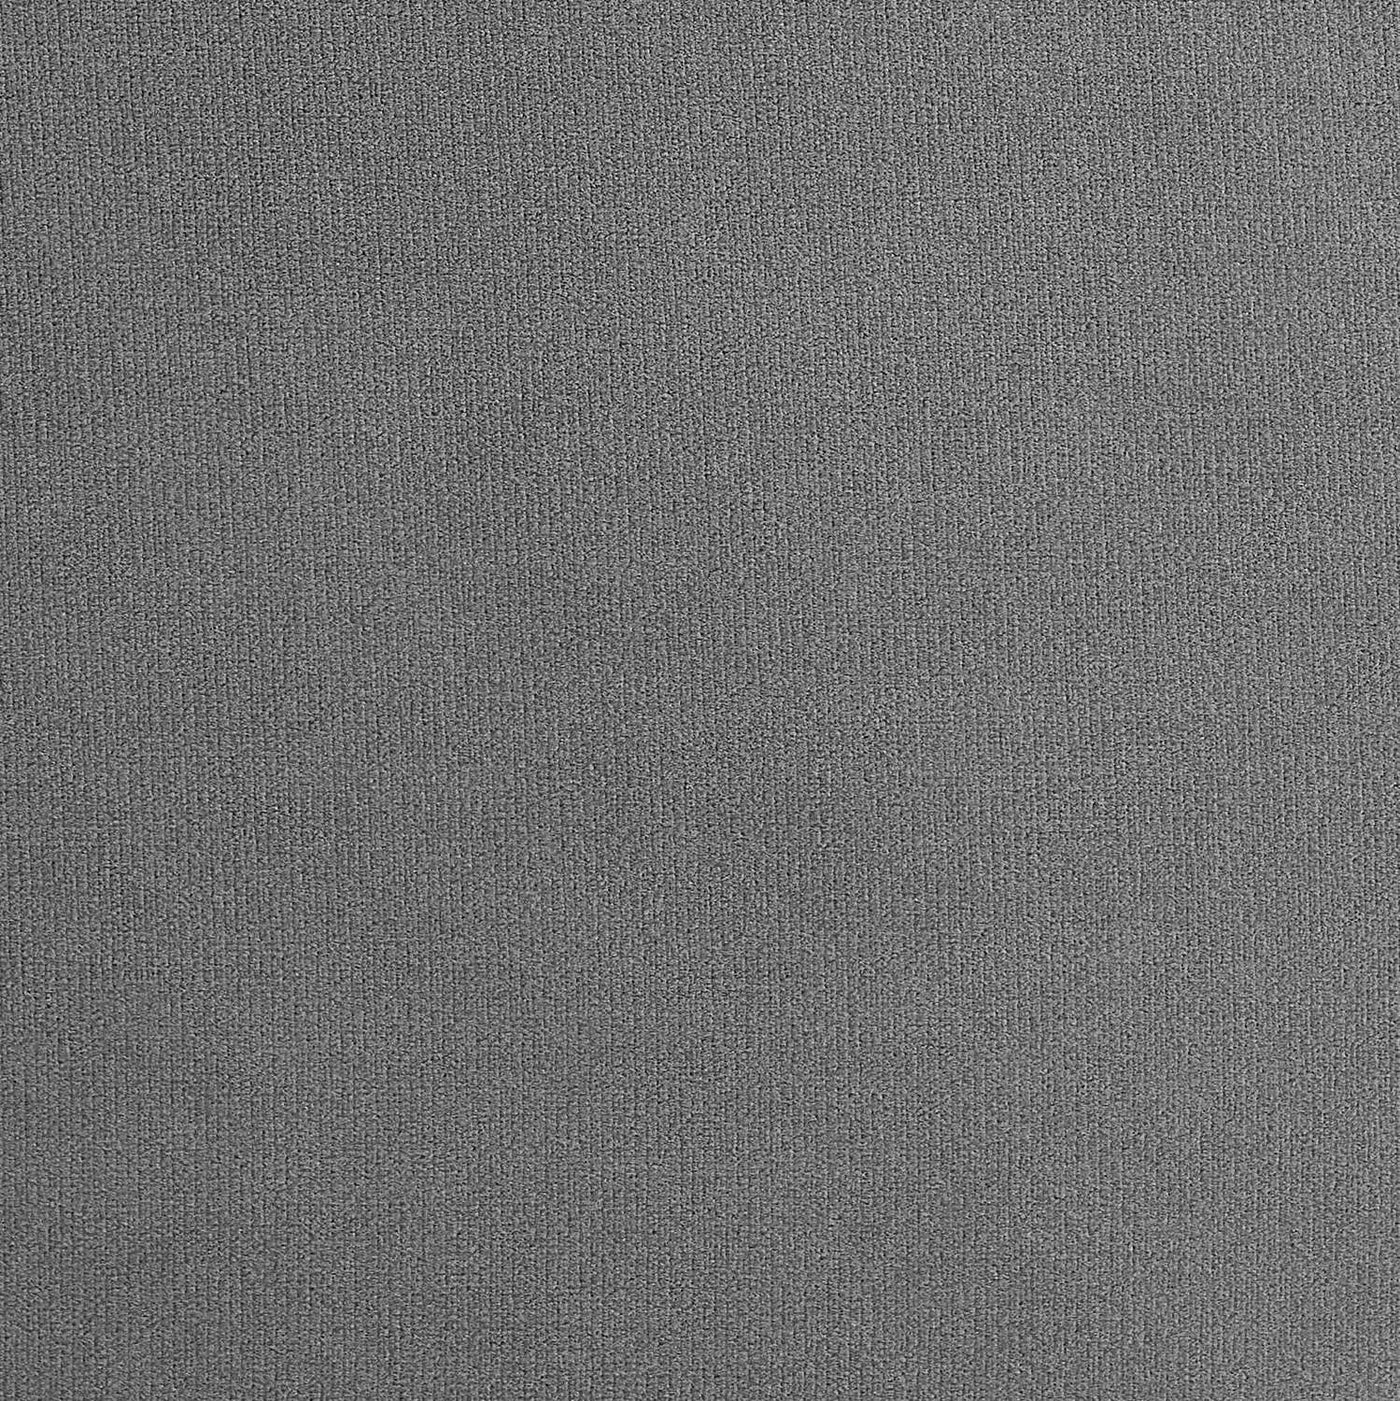 Nori 3-Piece Twin Bed - Grey